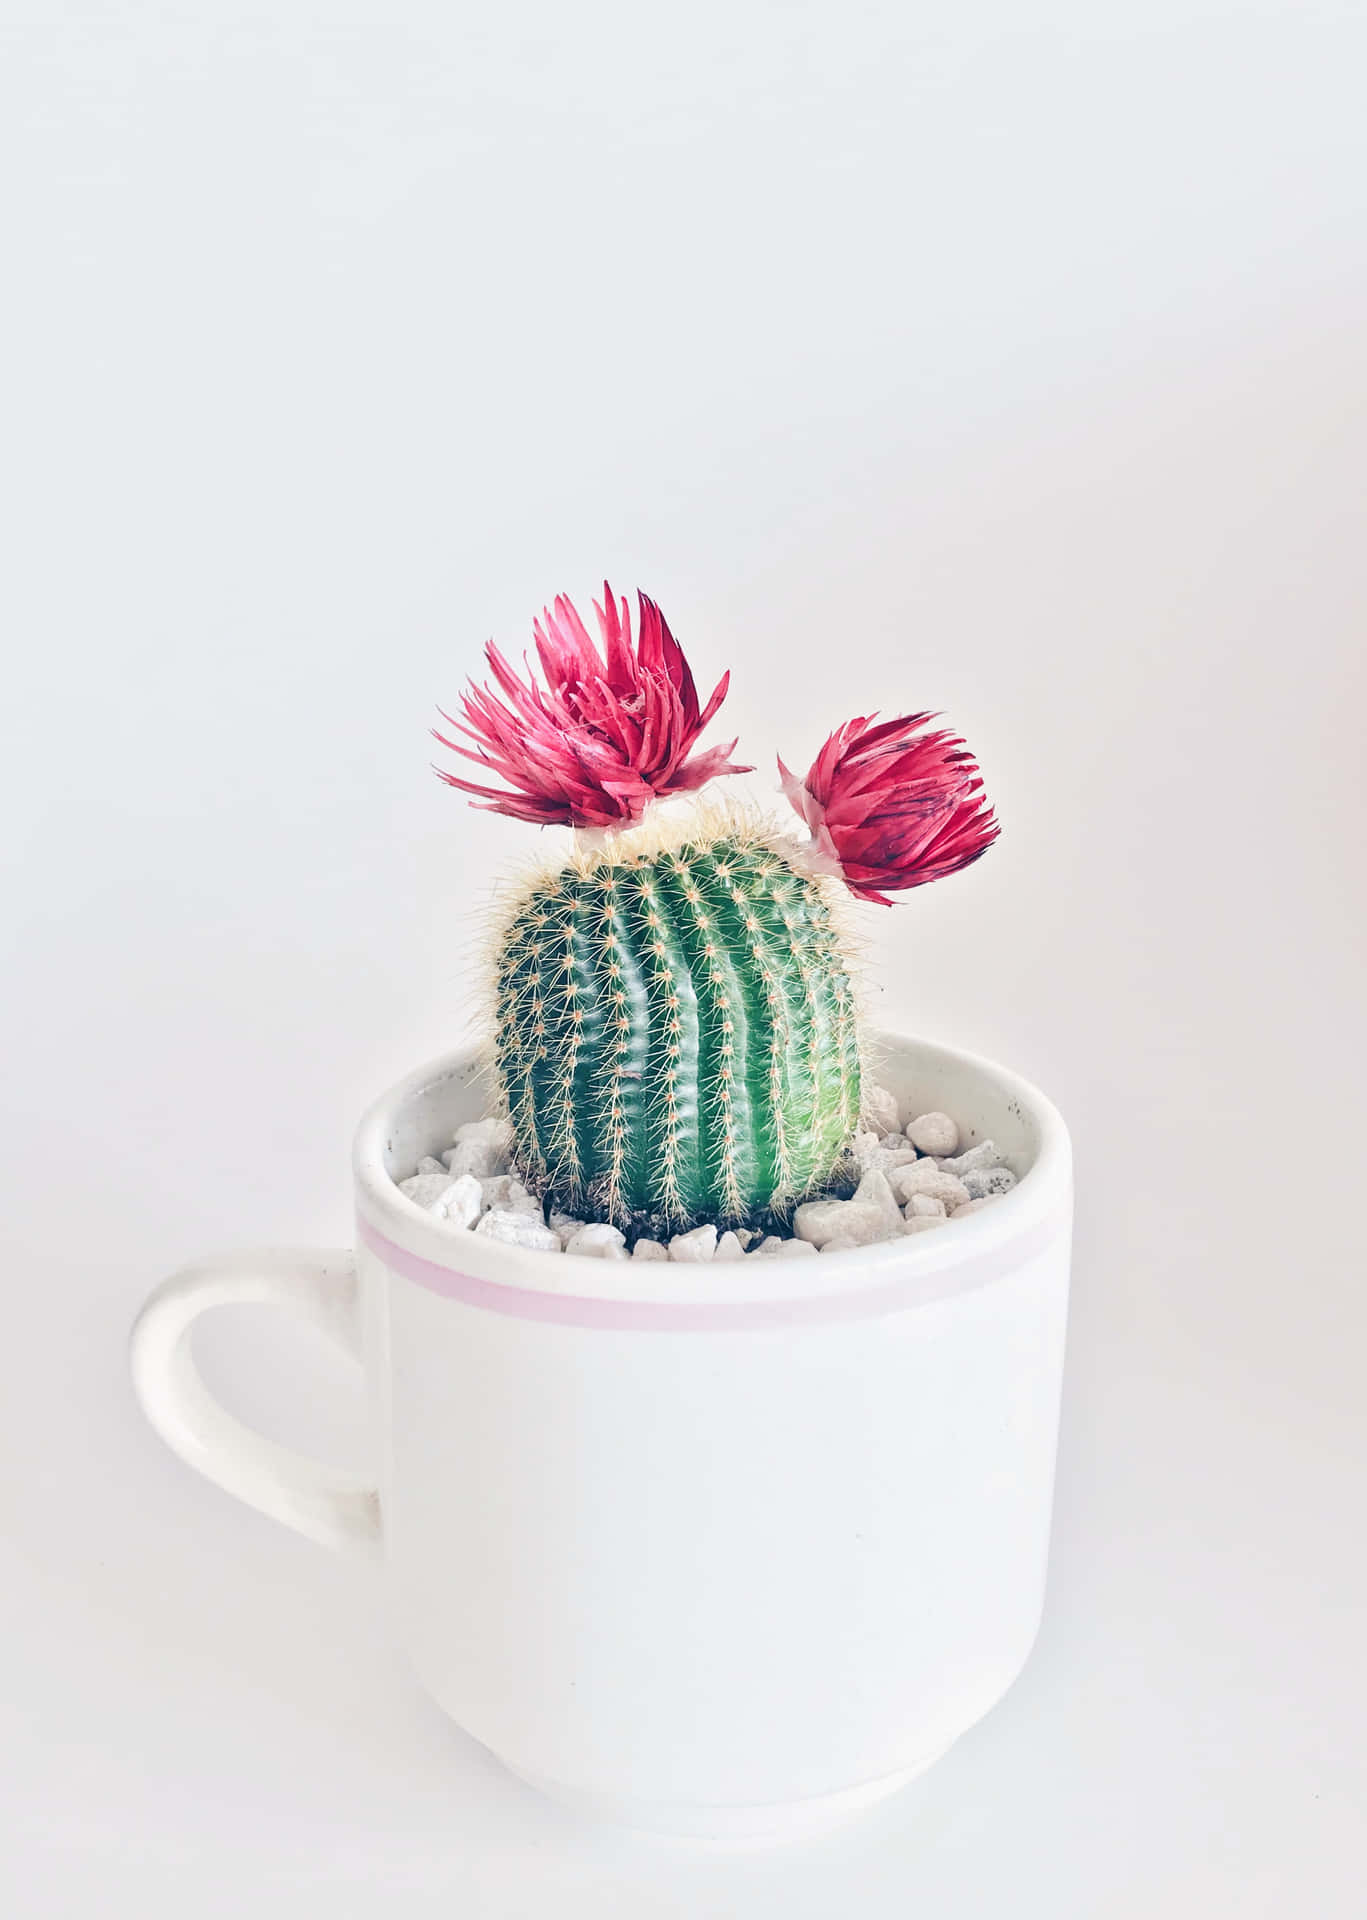 Cactus Flower In Cup Wallpaper